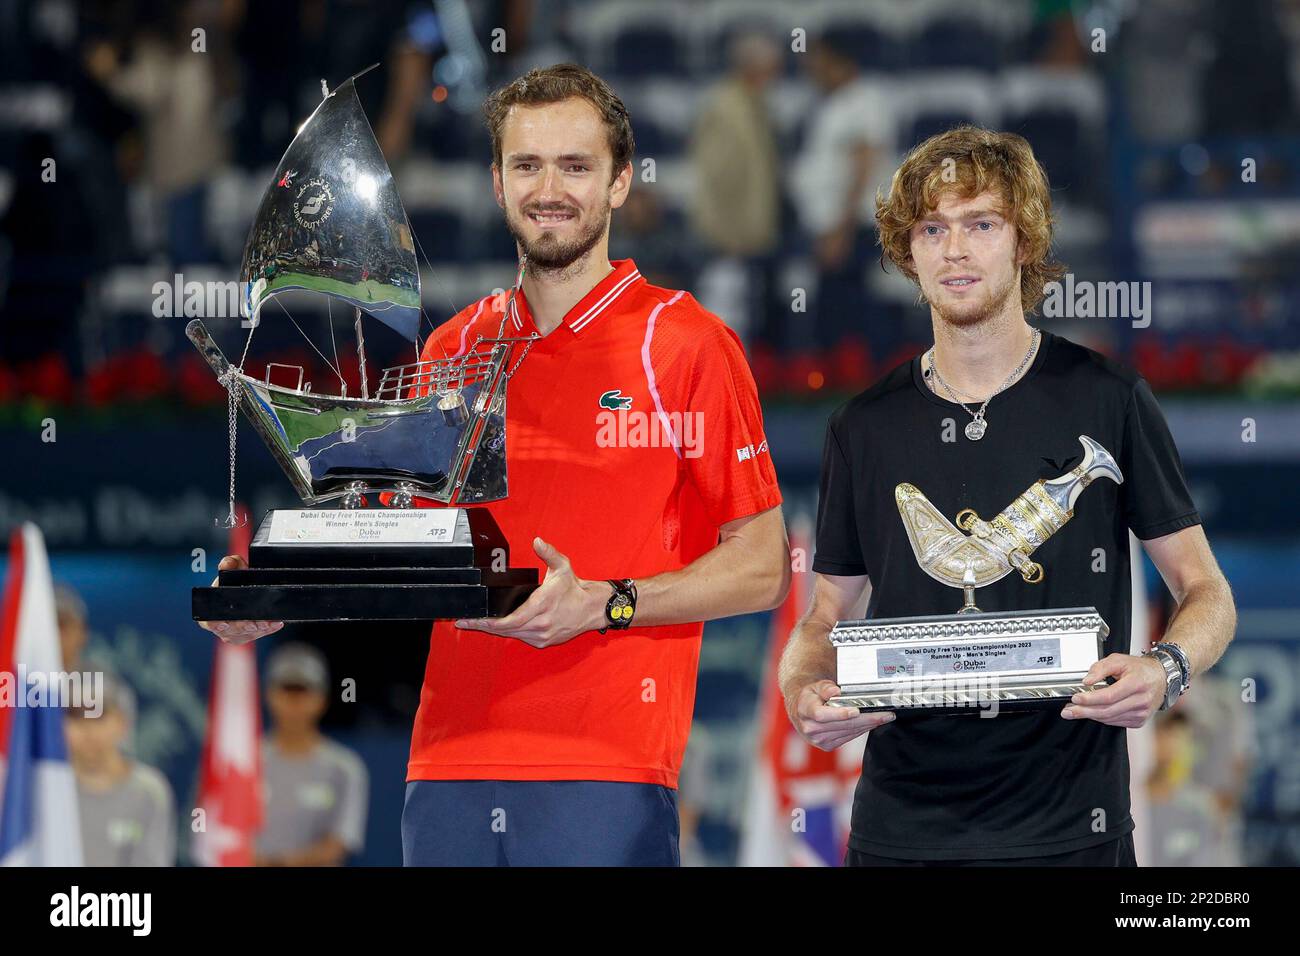 Tennis, ATP – Dubai Open 2023: Medvedev wins the tournament against Rublev  - Tennis Majors